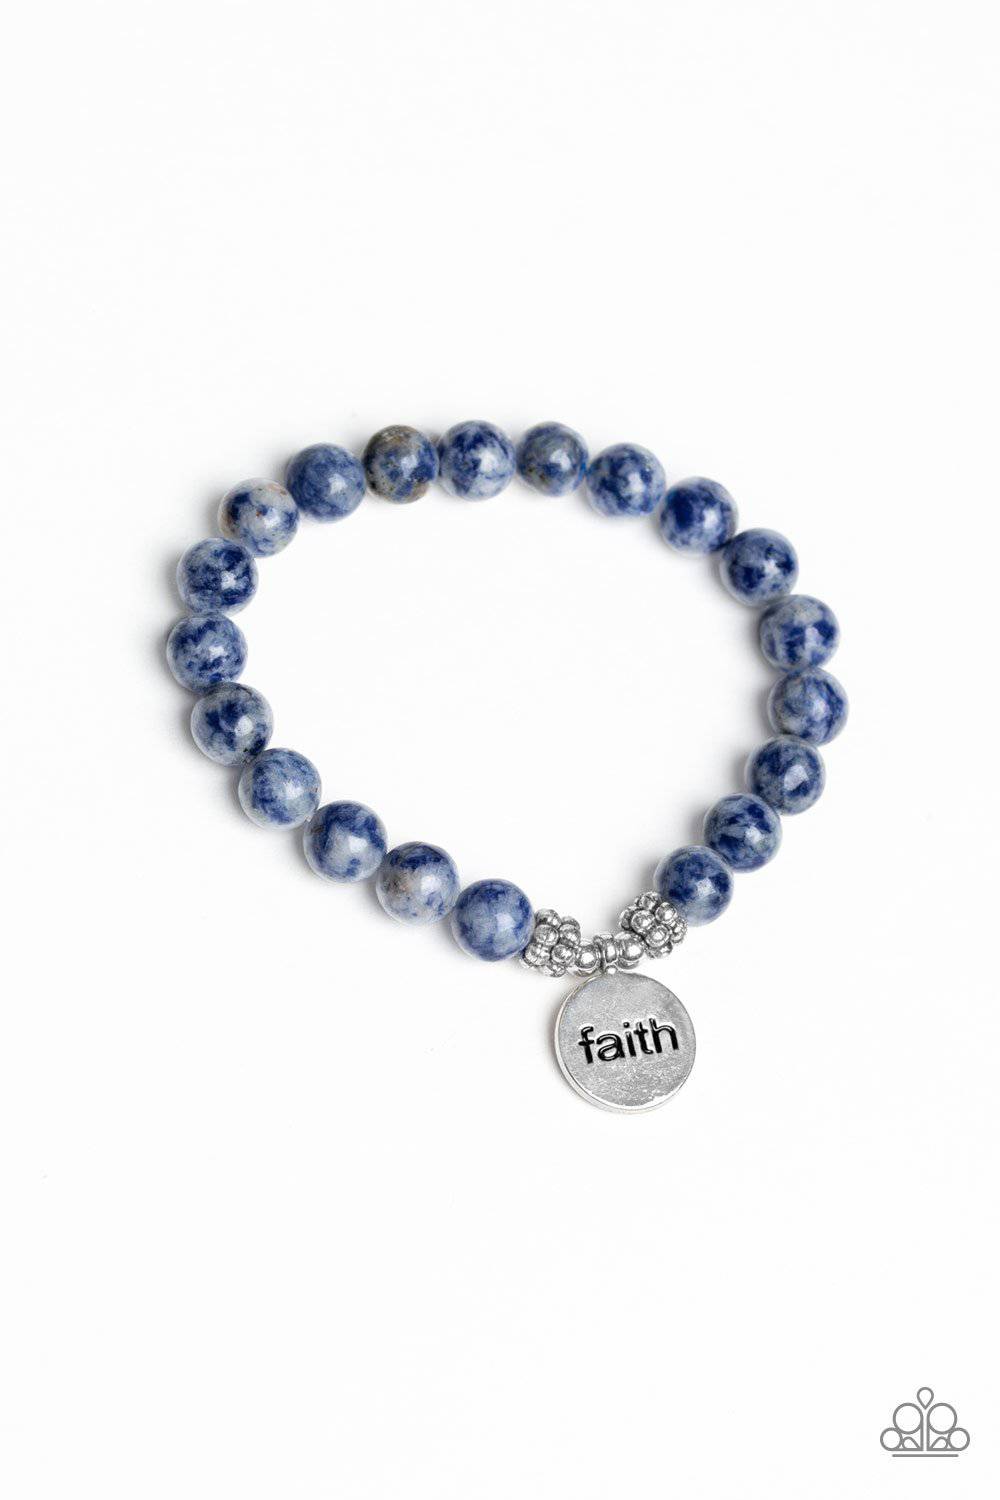 FAITH It, Till You Make It - Blue Stone "Faith" Bracelet - Paparazzi Accessories - GlaMarous Titi Jewels